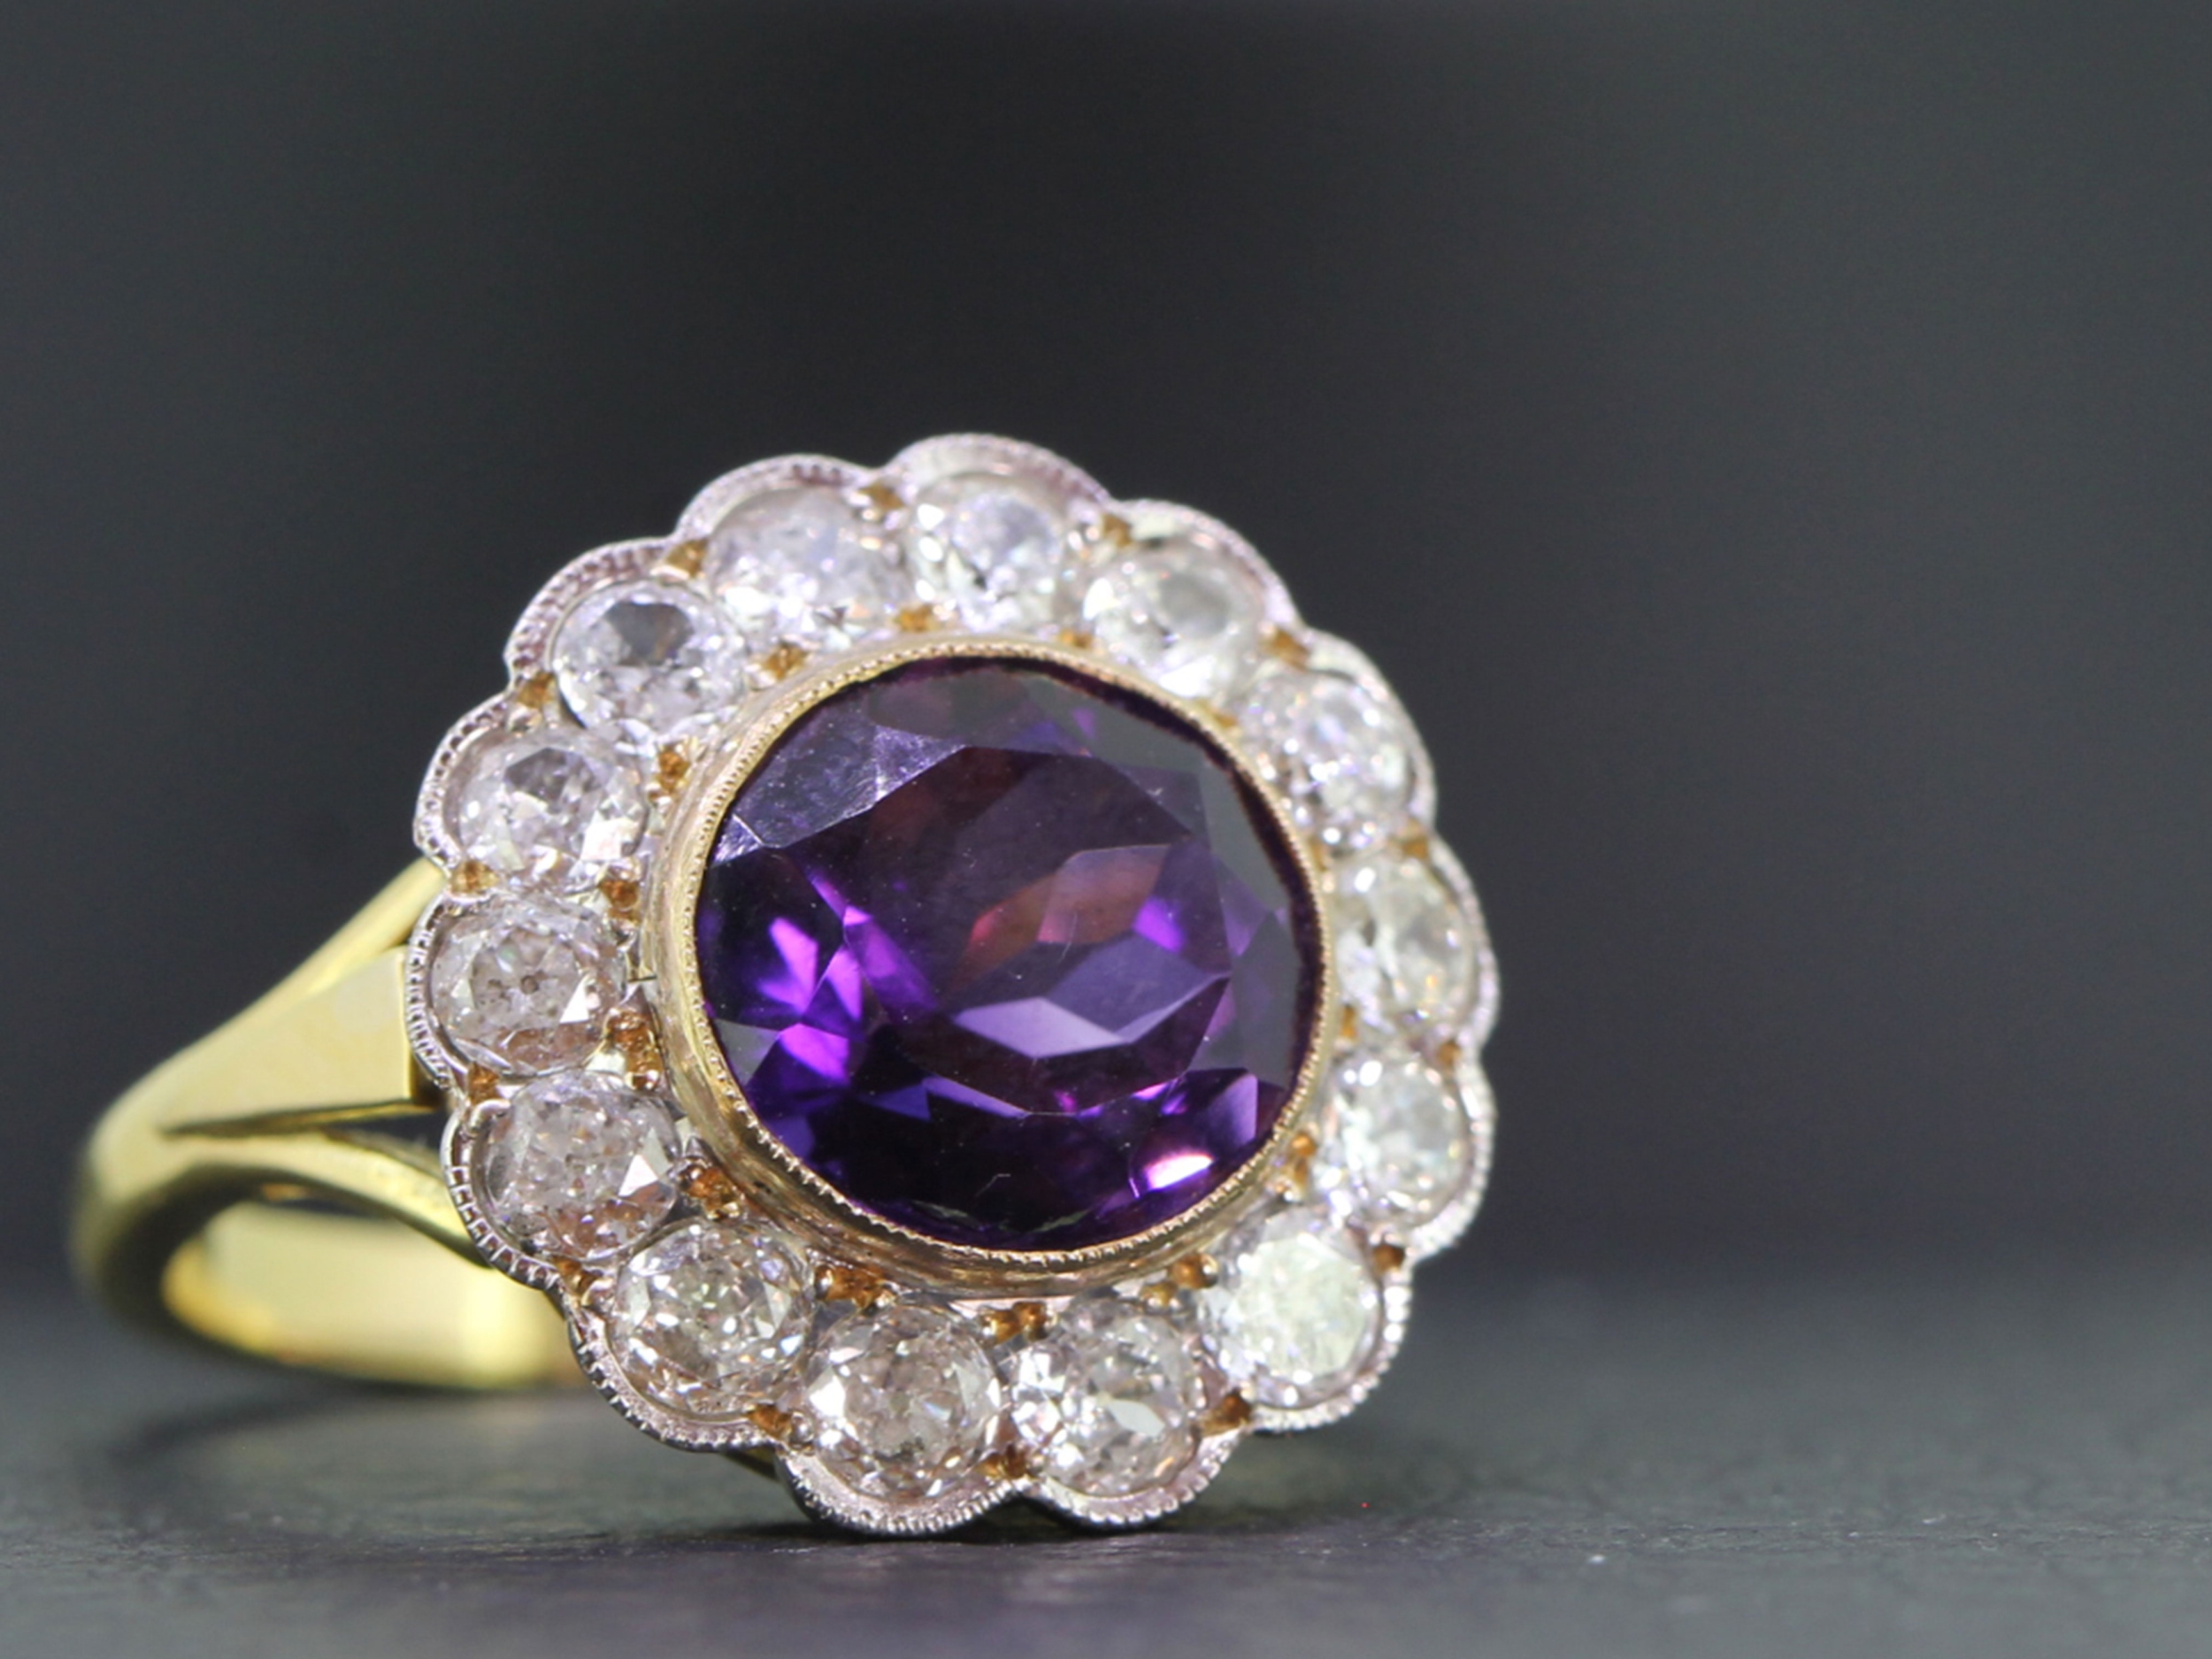 Stunning 4 carat amethyst and diamond cluster 18 carat gold ring